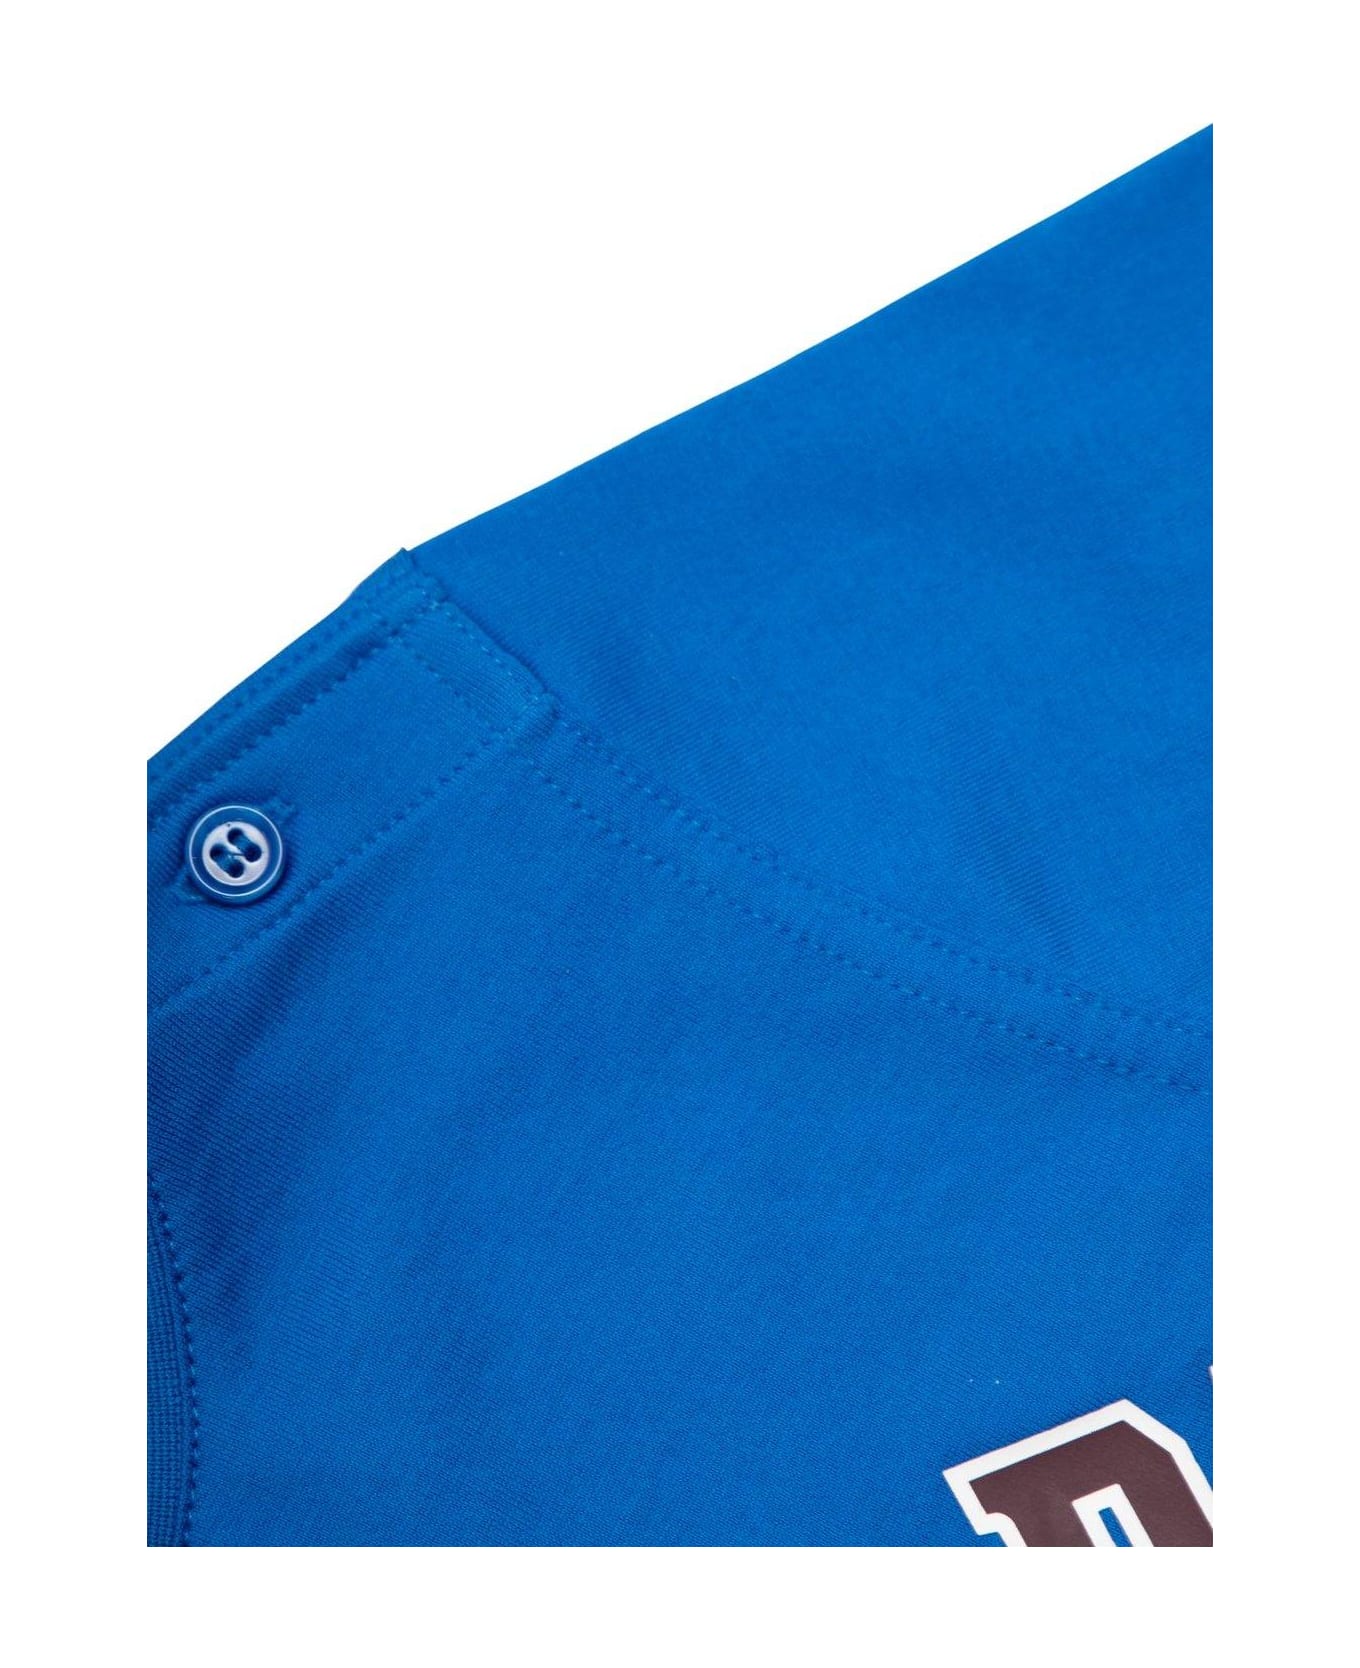 Burberry Logo Printed Crewneck T-shirt - Blu